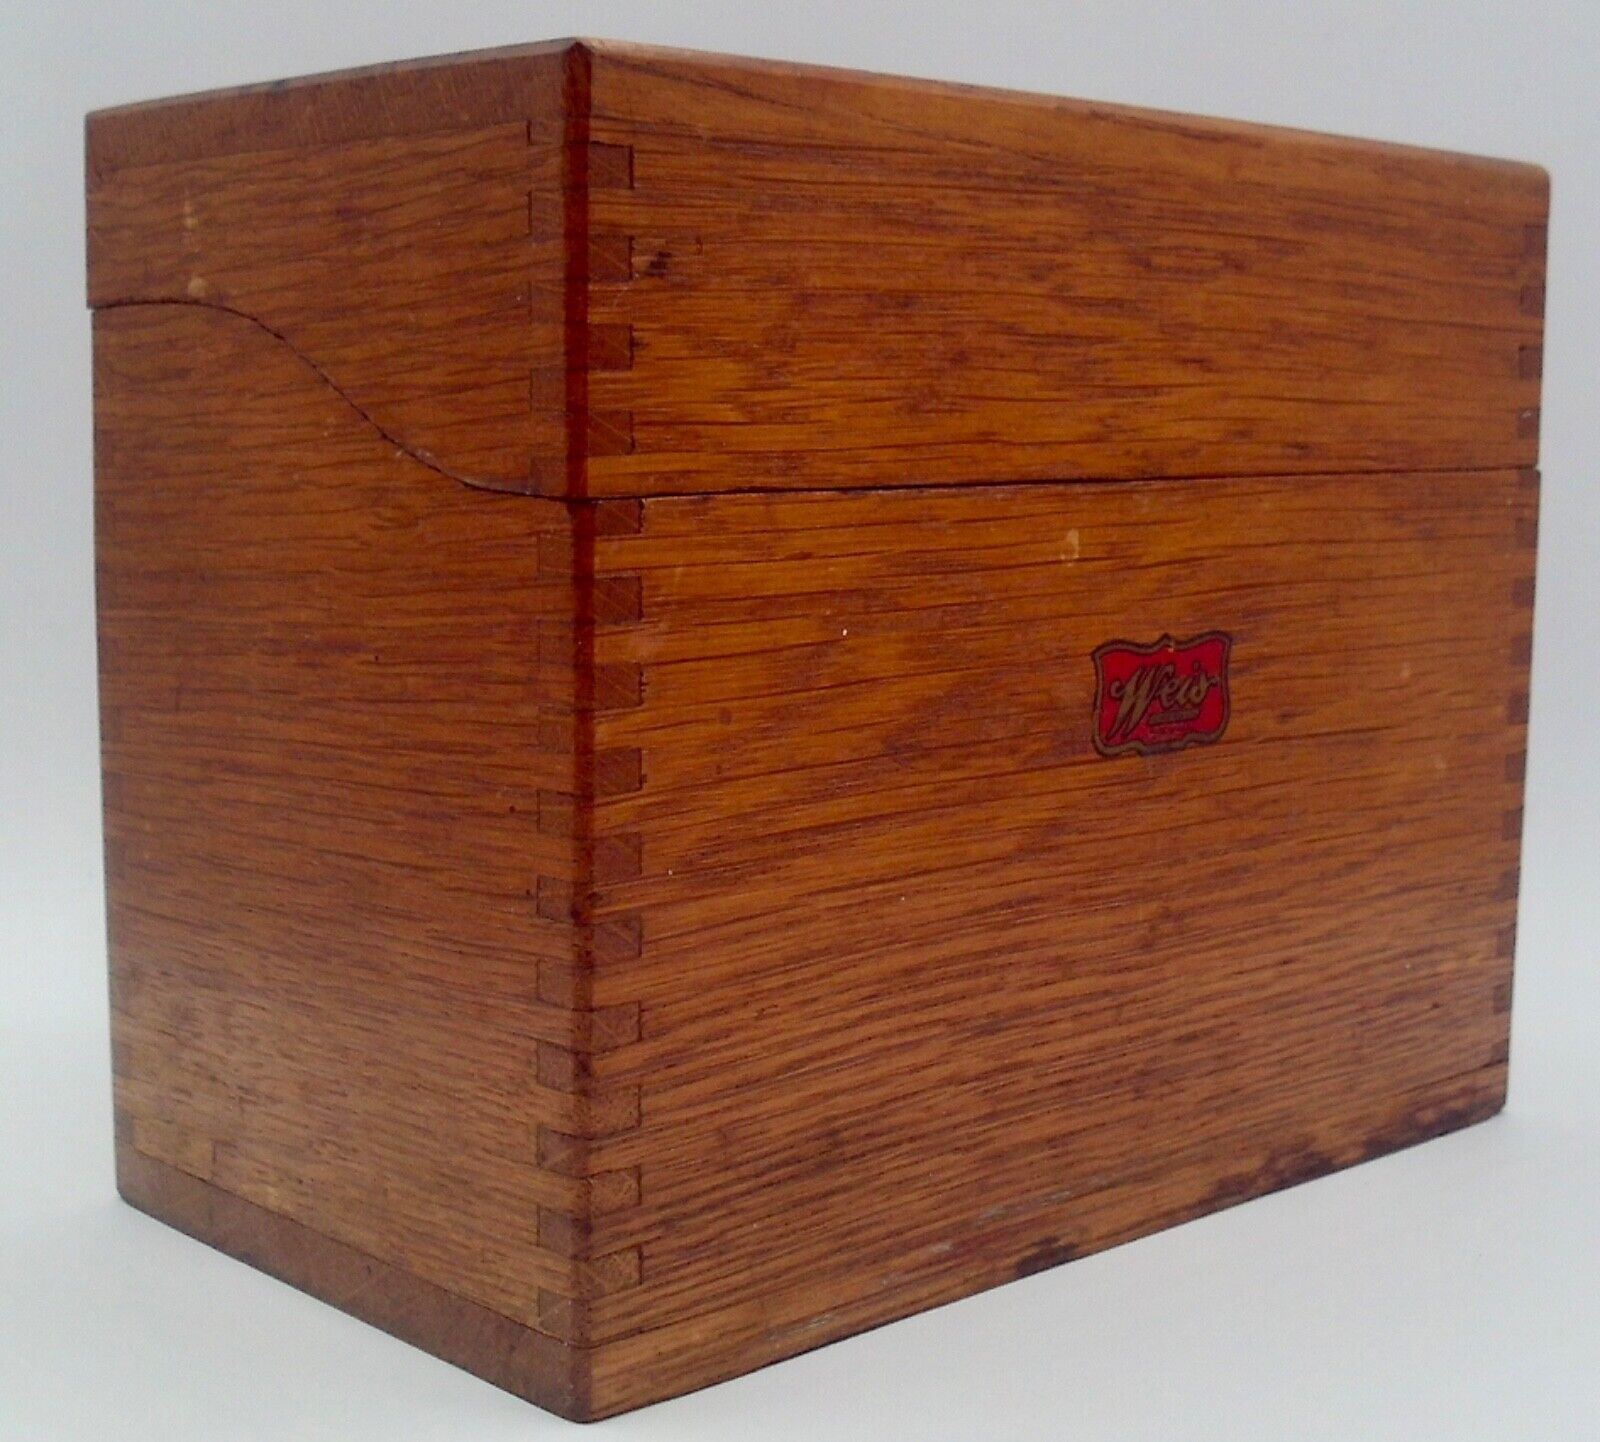 Vintage Weis Wood Recipe Box